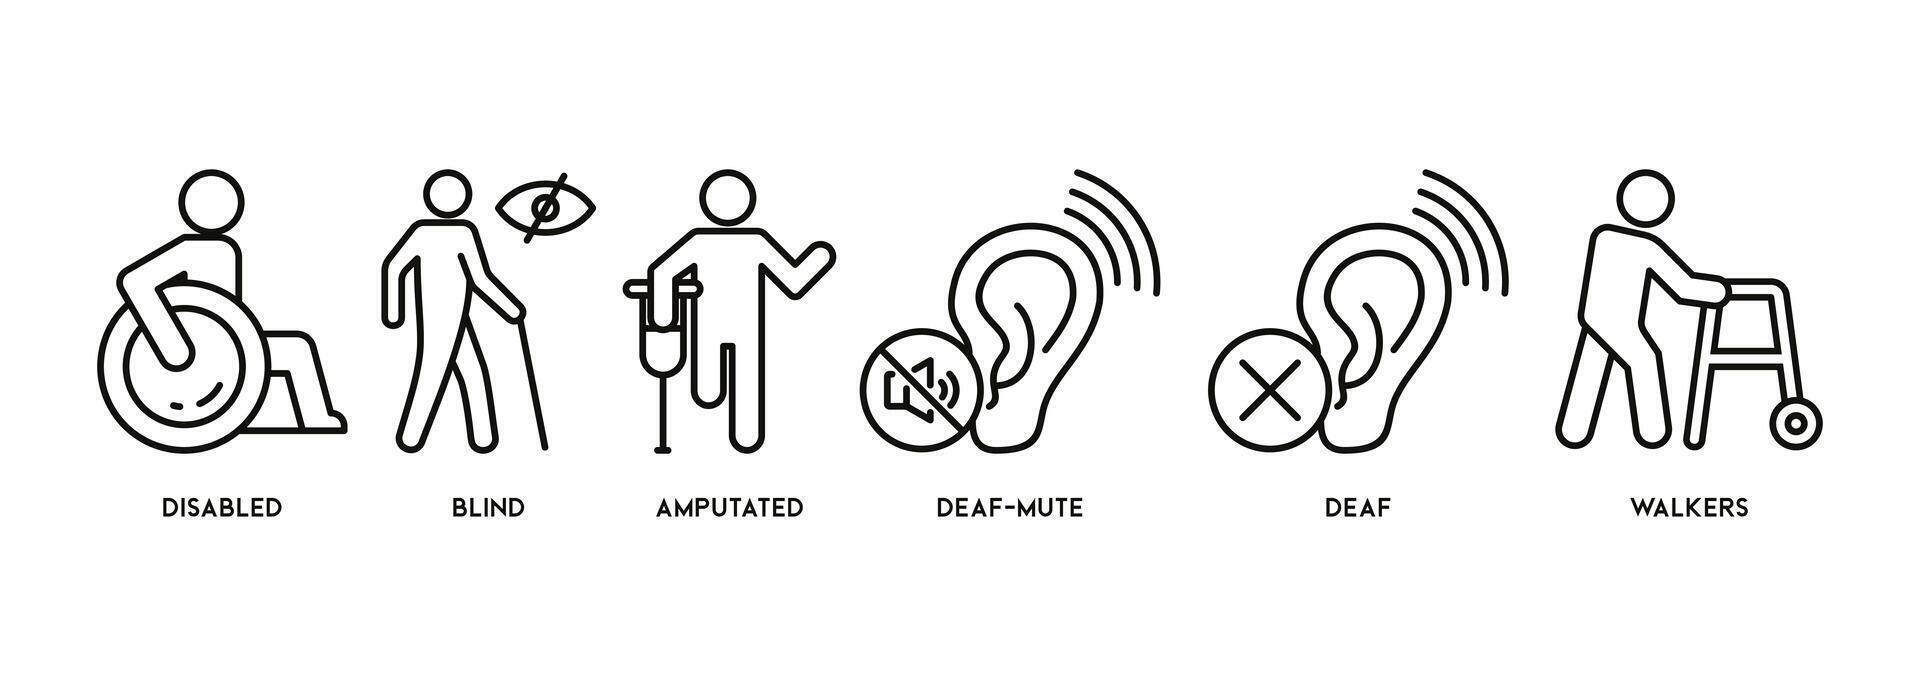 invalidez bandera web icono vector ilustración concepto con icono de desactivado, ciego, amputado, sordomudo, sordo, caminantes